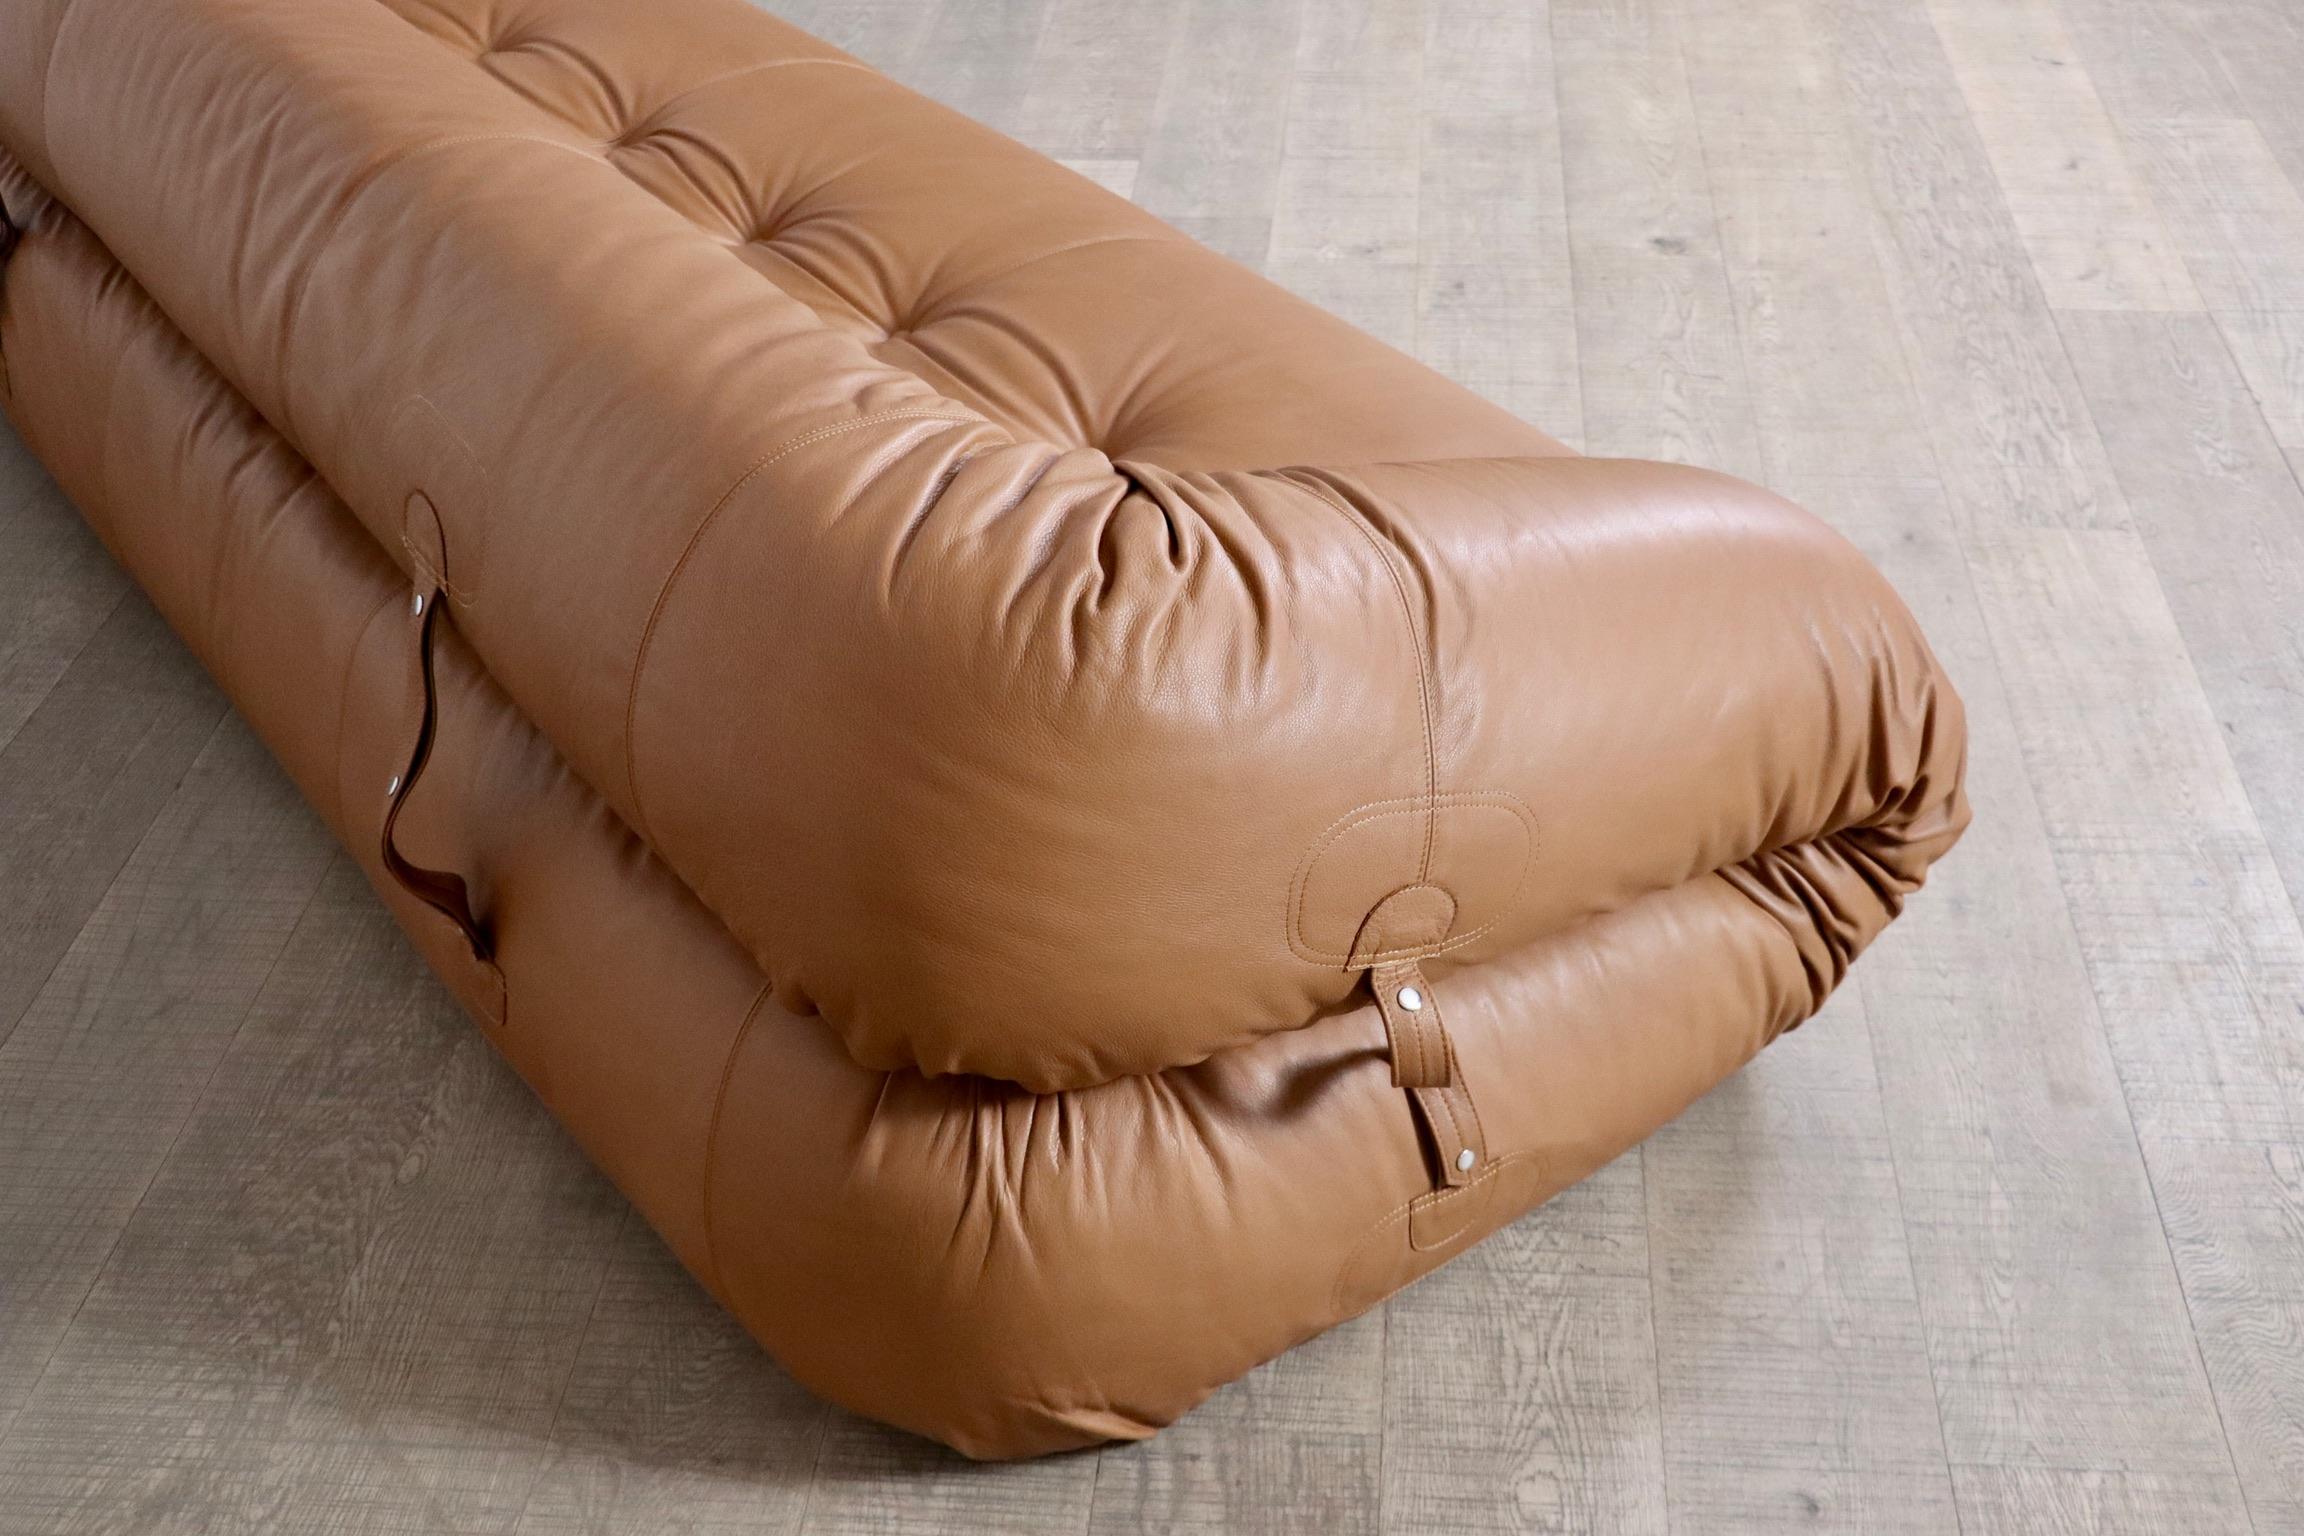 Anfibio Sofa Bed In Cognac Leather By Alessandro Becchi For Giovanetti Collezion 8